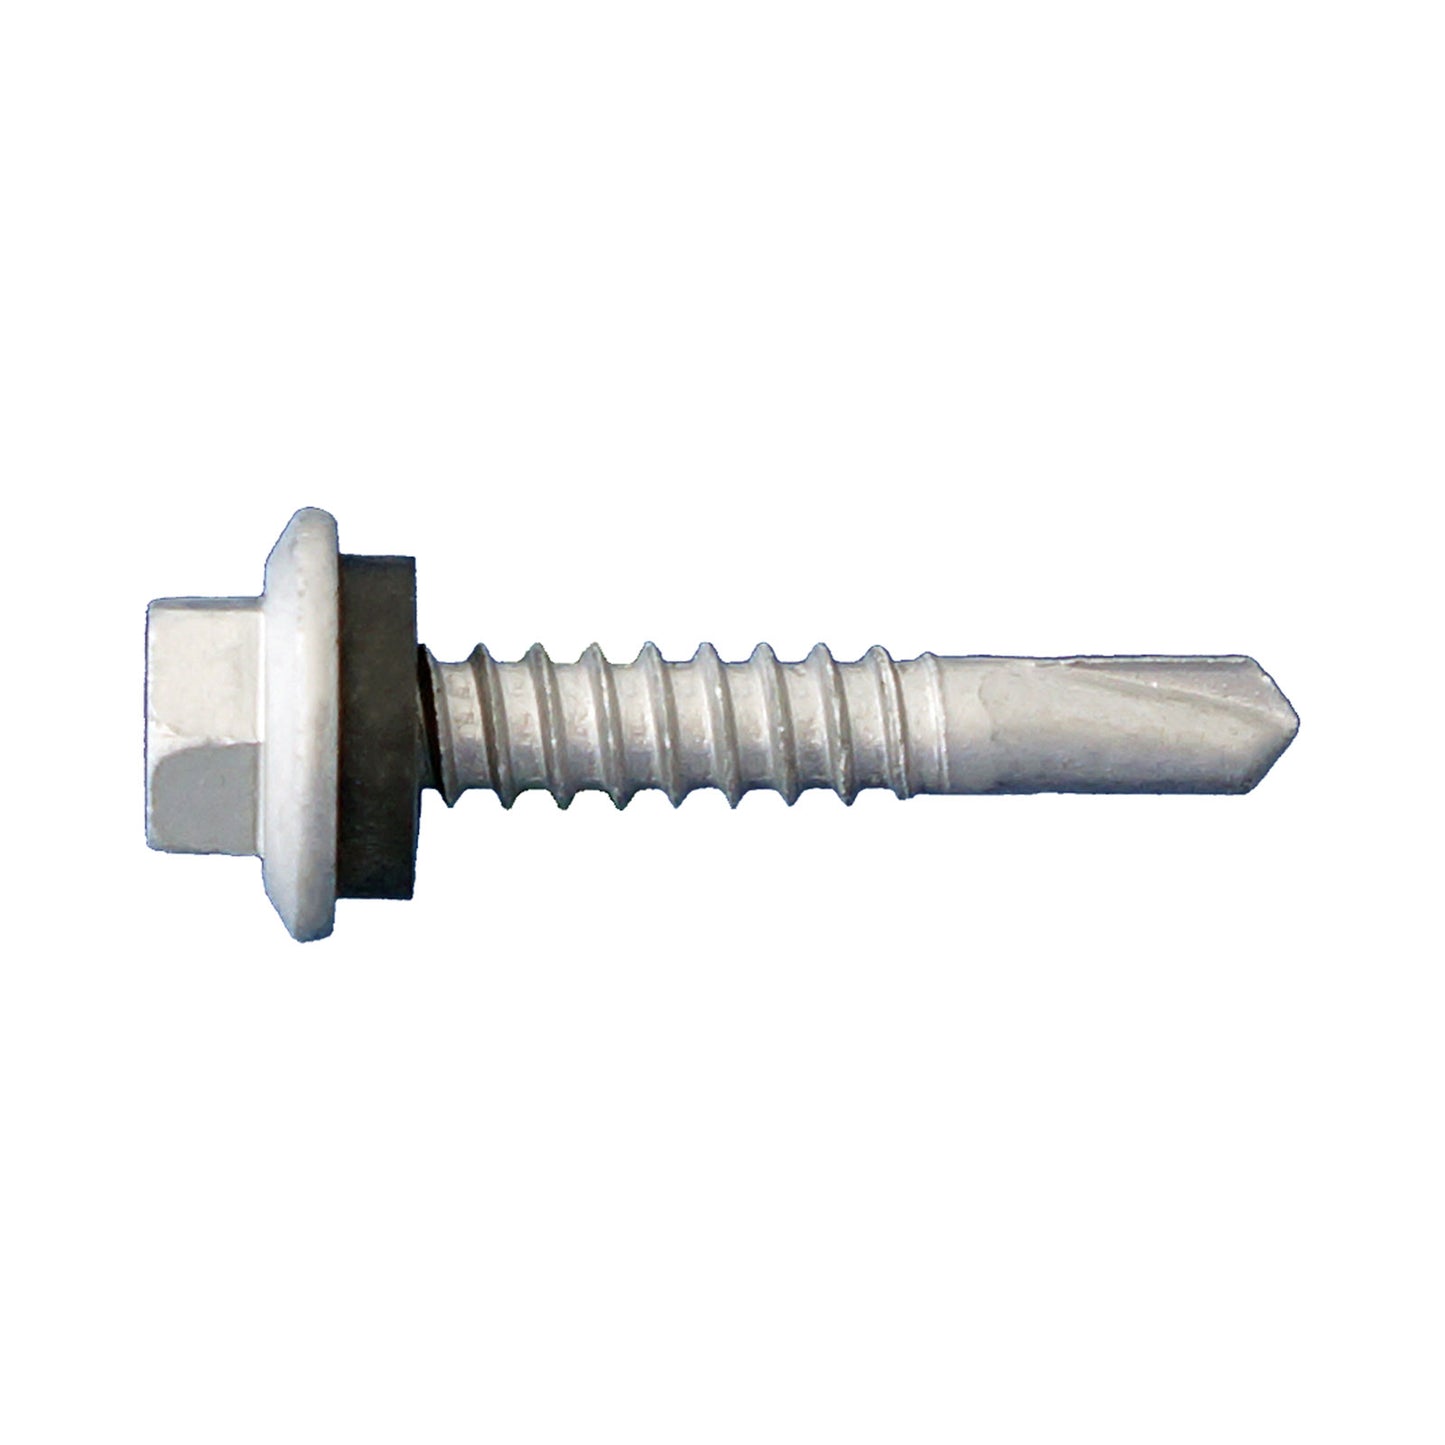 #12 x 1-1/4" Self-Drilling Metal Screw w/Washer, Hex Head - Dagger-Guard Coating, Pkg 250